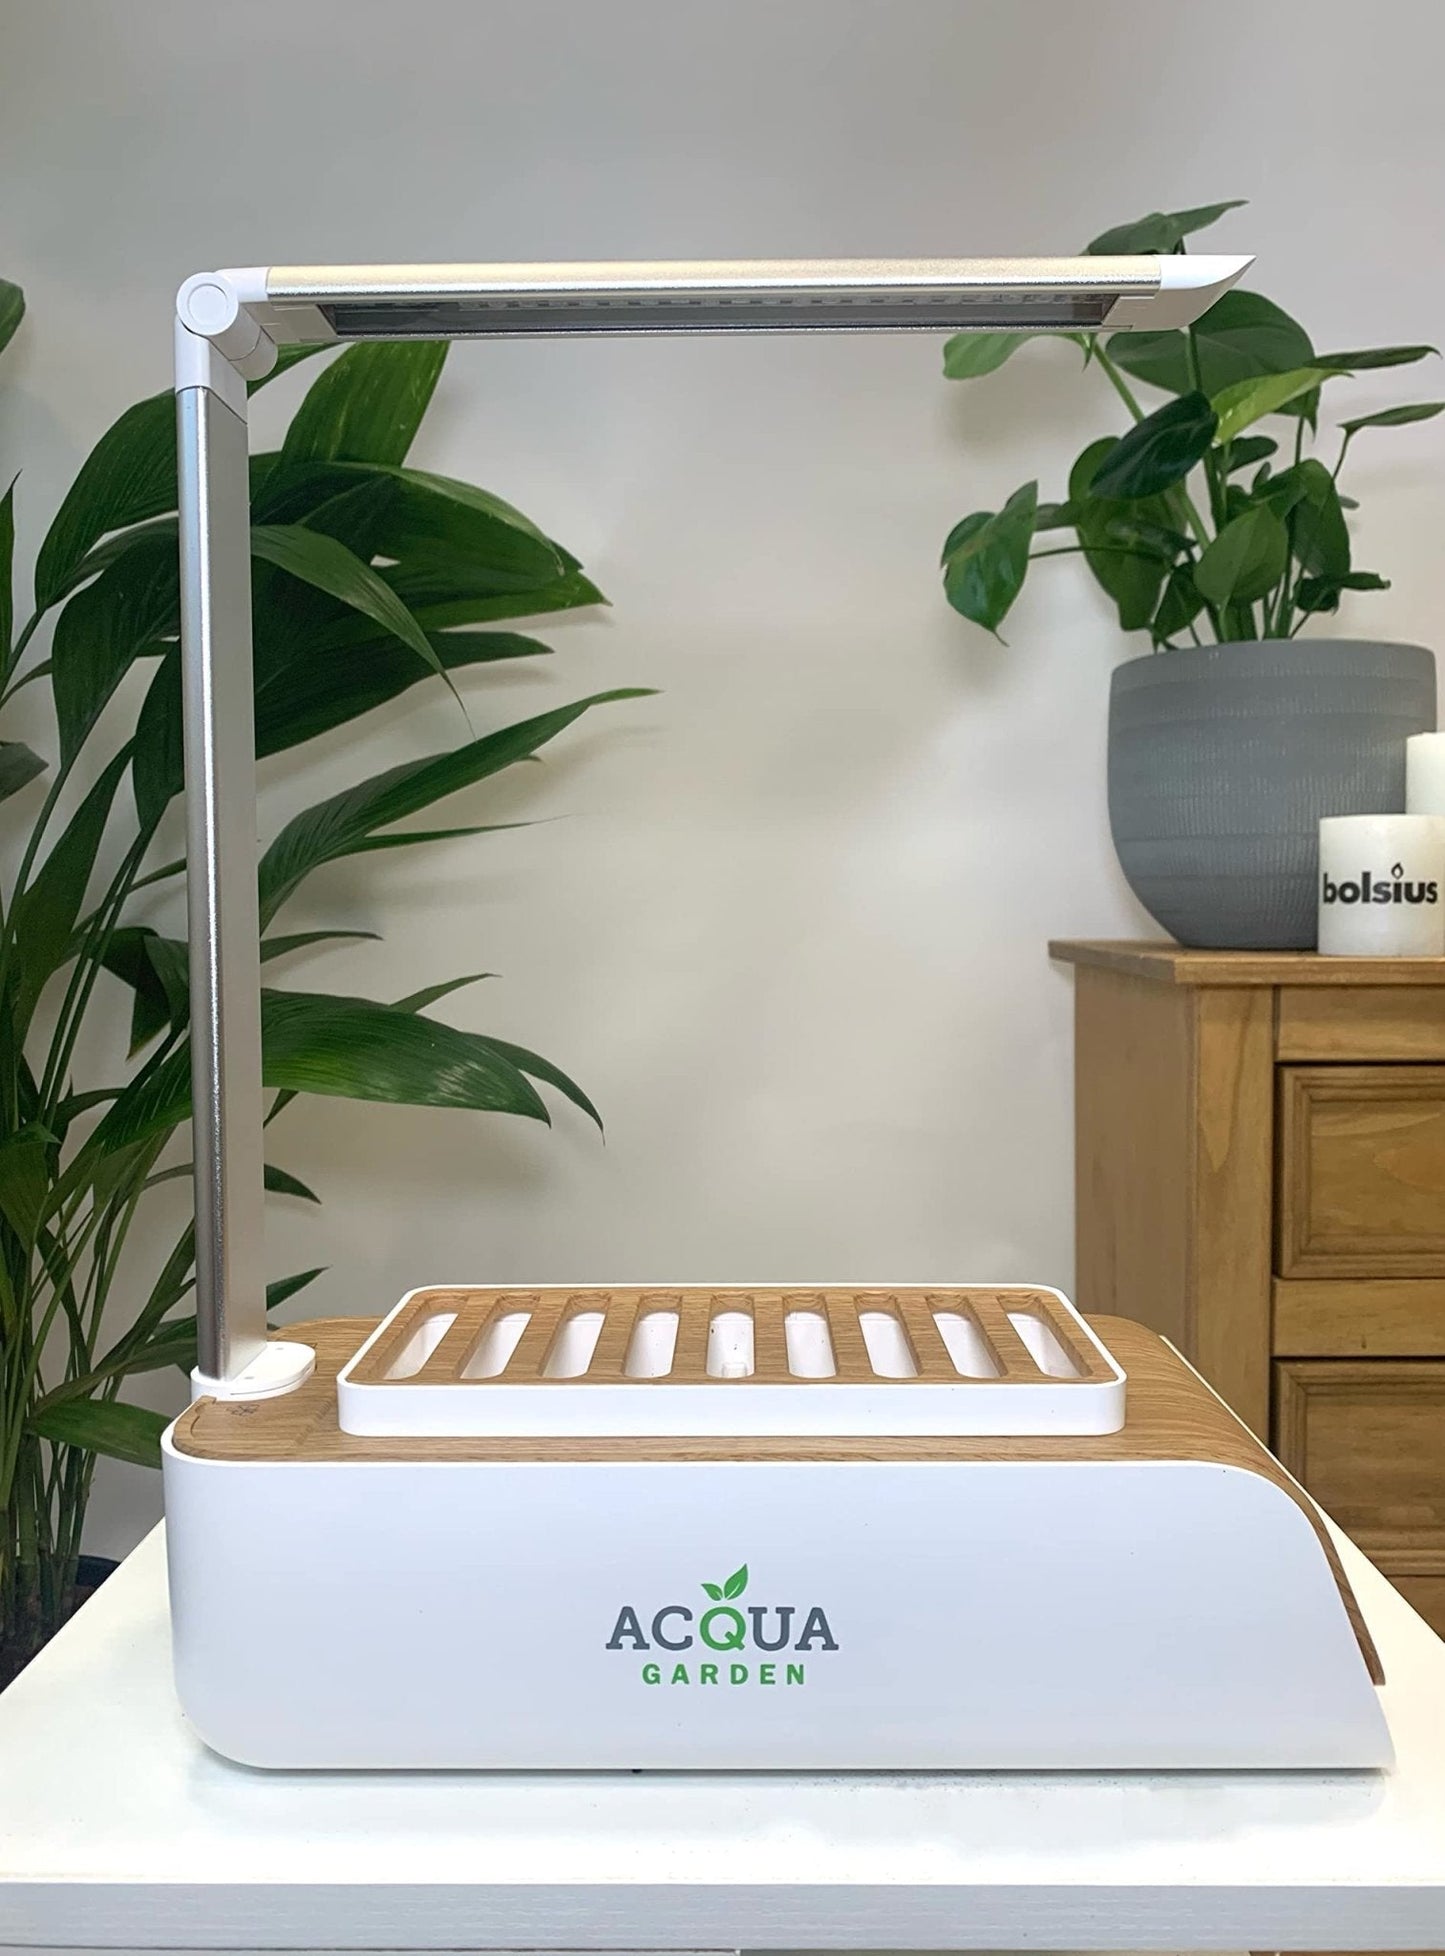 Acqua Smart Garden 2.0 - Complete Grow Your Own Package - AcquaGarden